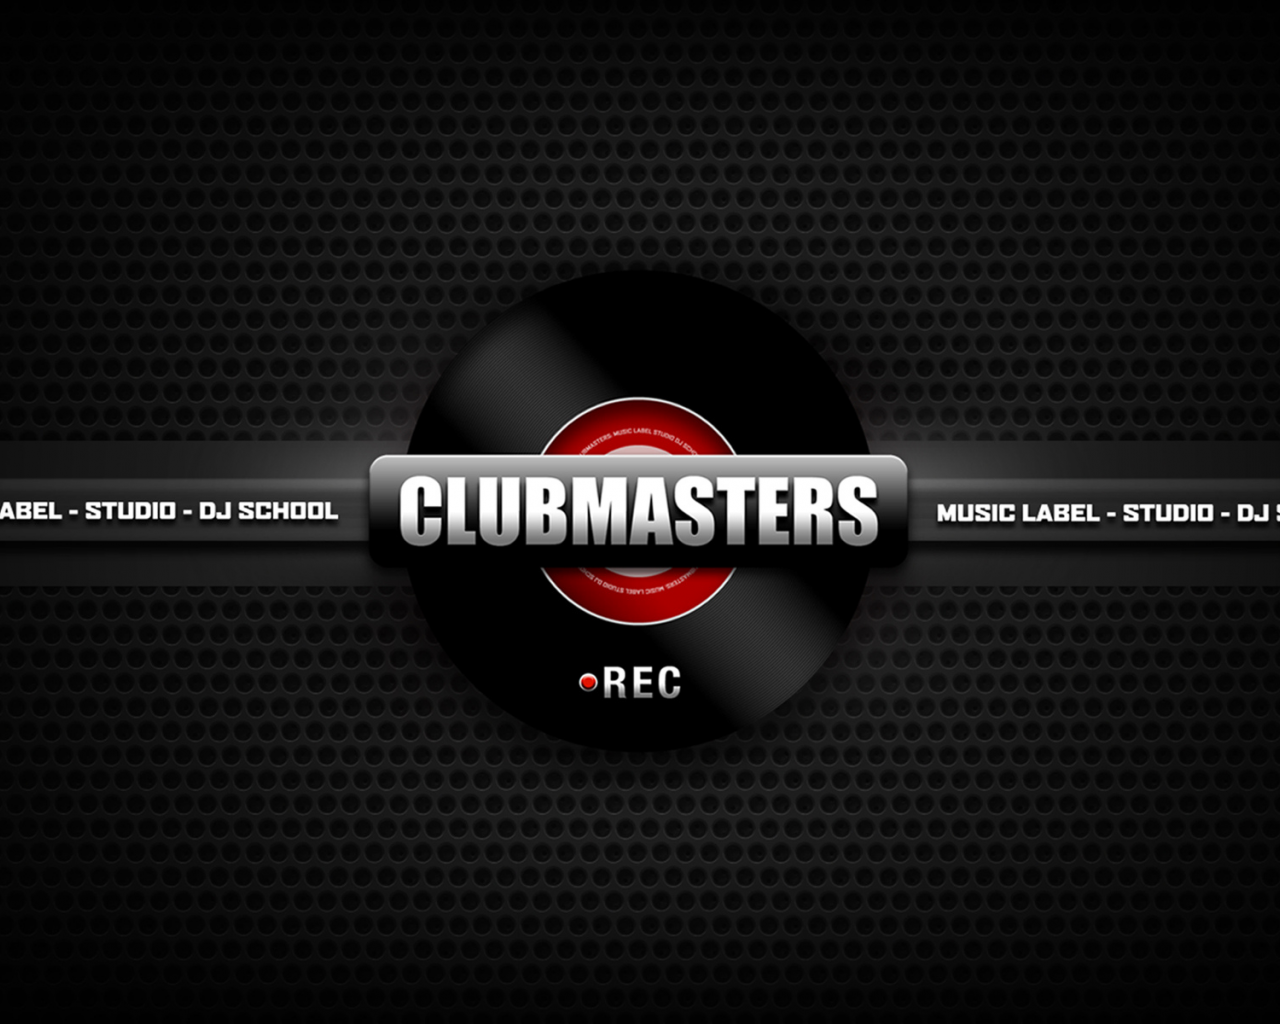 house, dj school, electro, tech, progressive, music, club, trance, records, Clubmasters, label